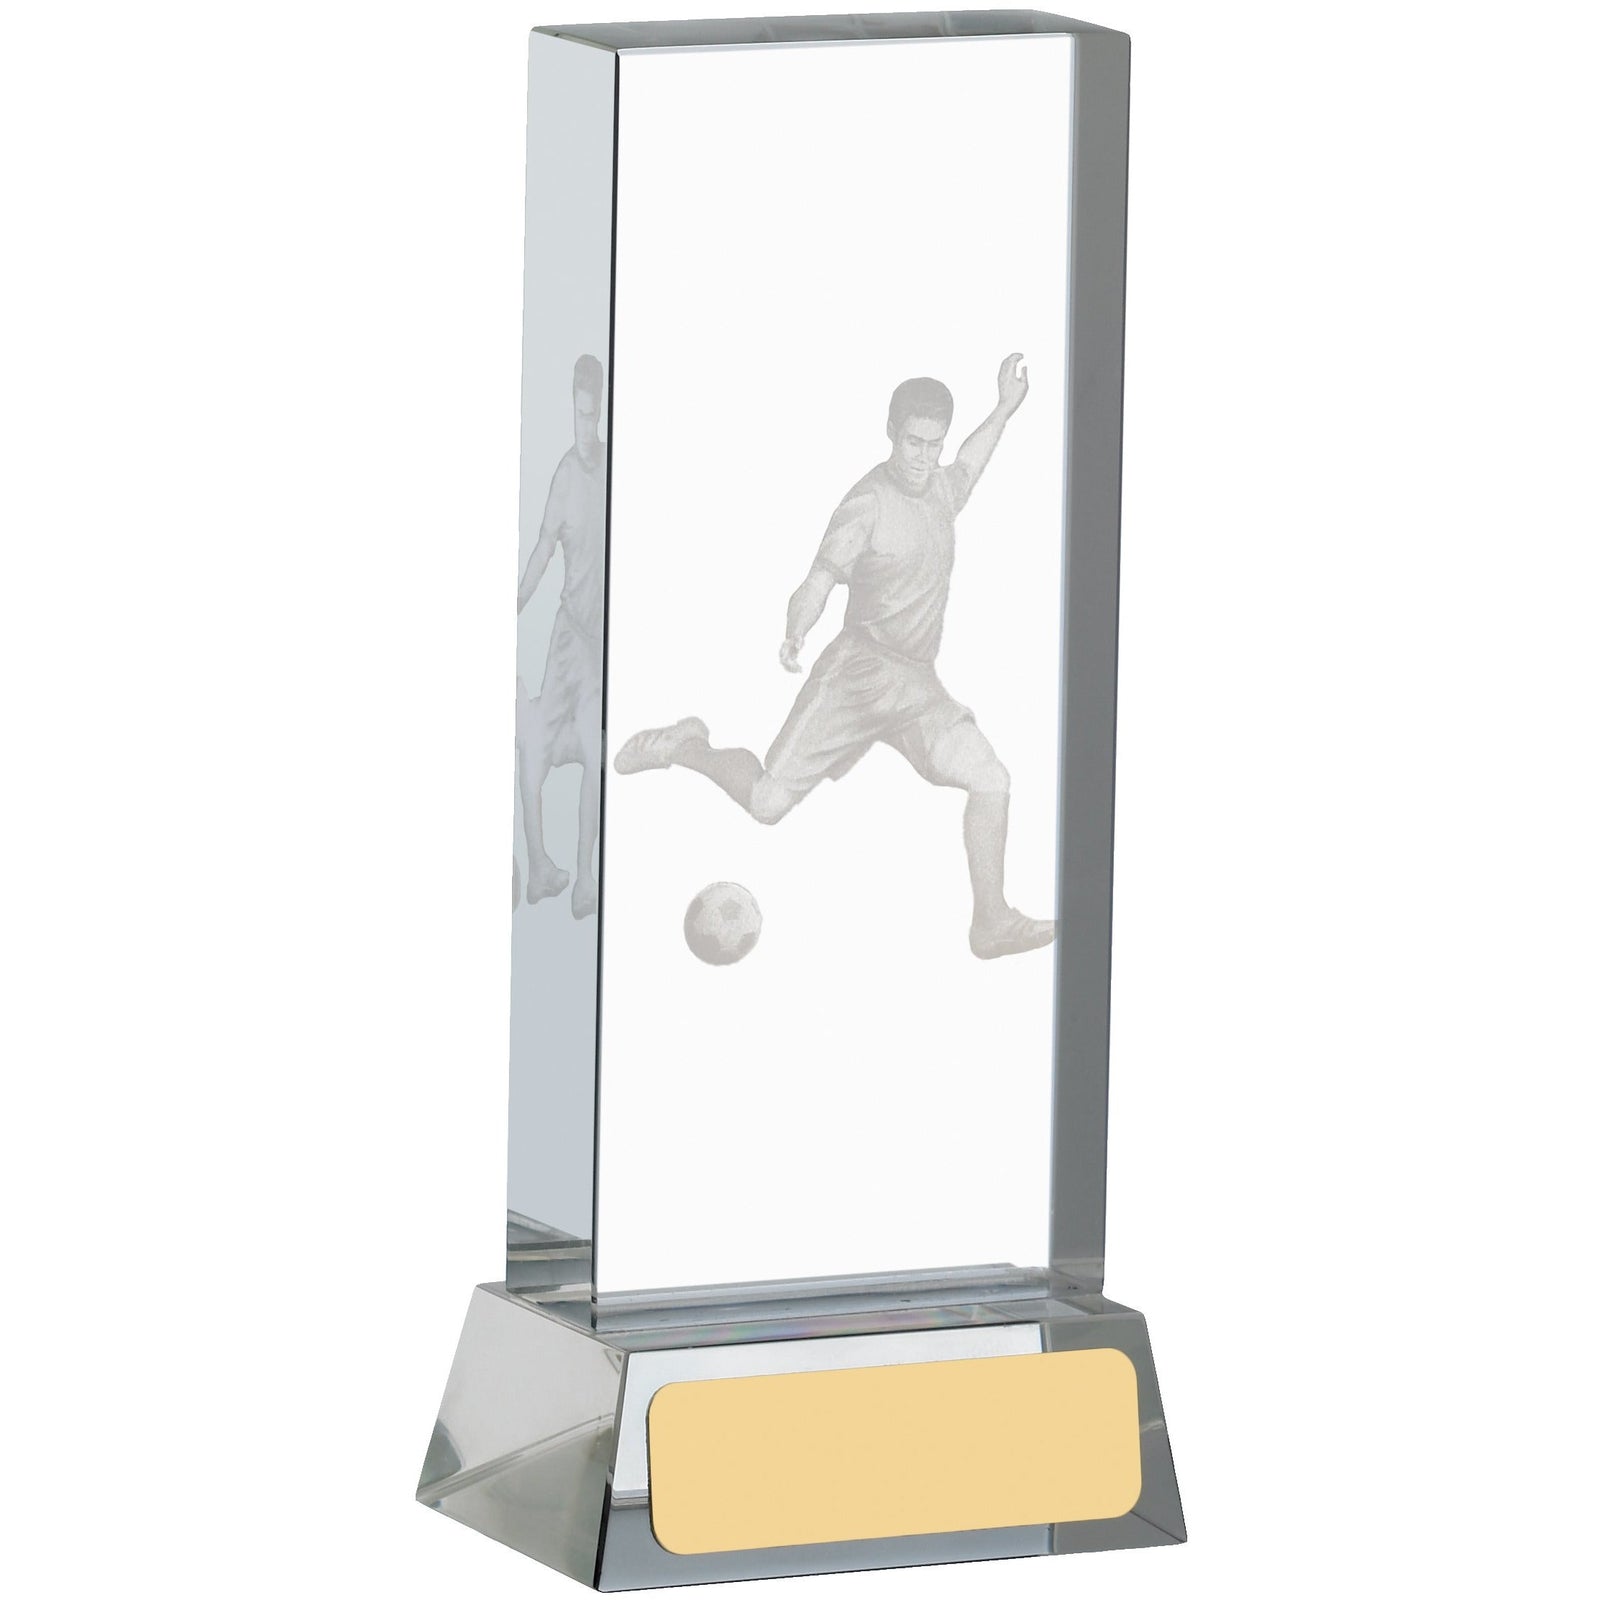 Football Glass Block Award With Player